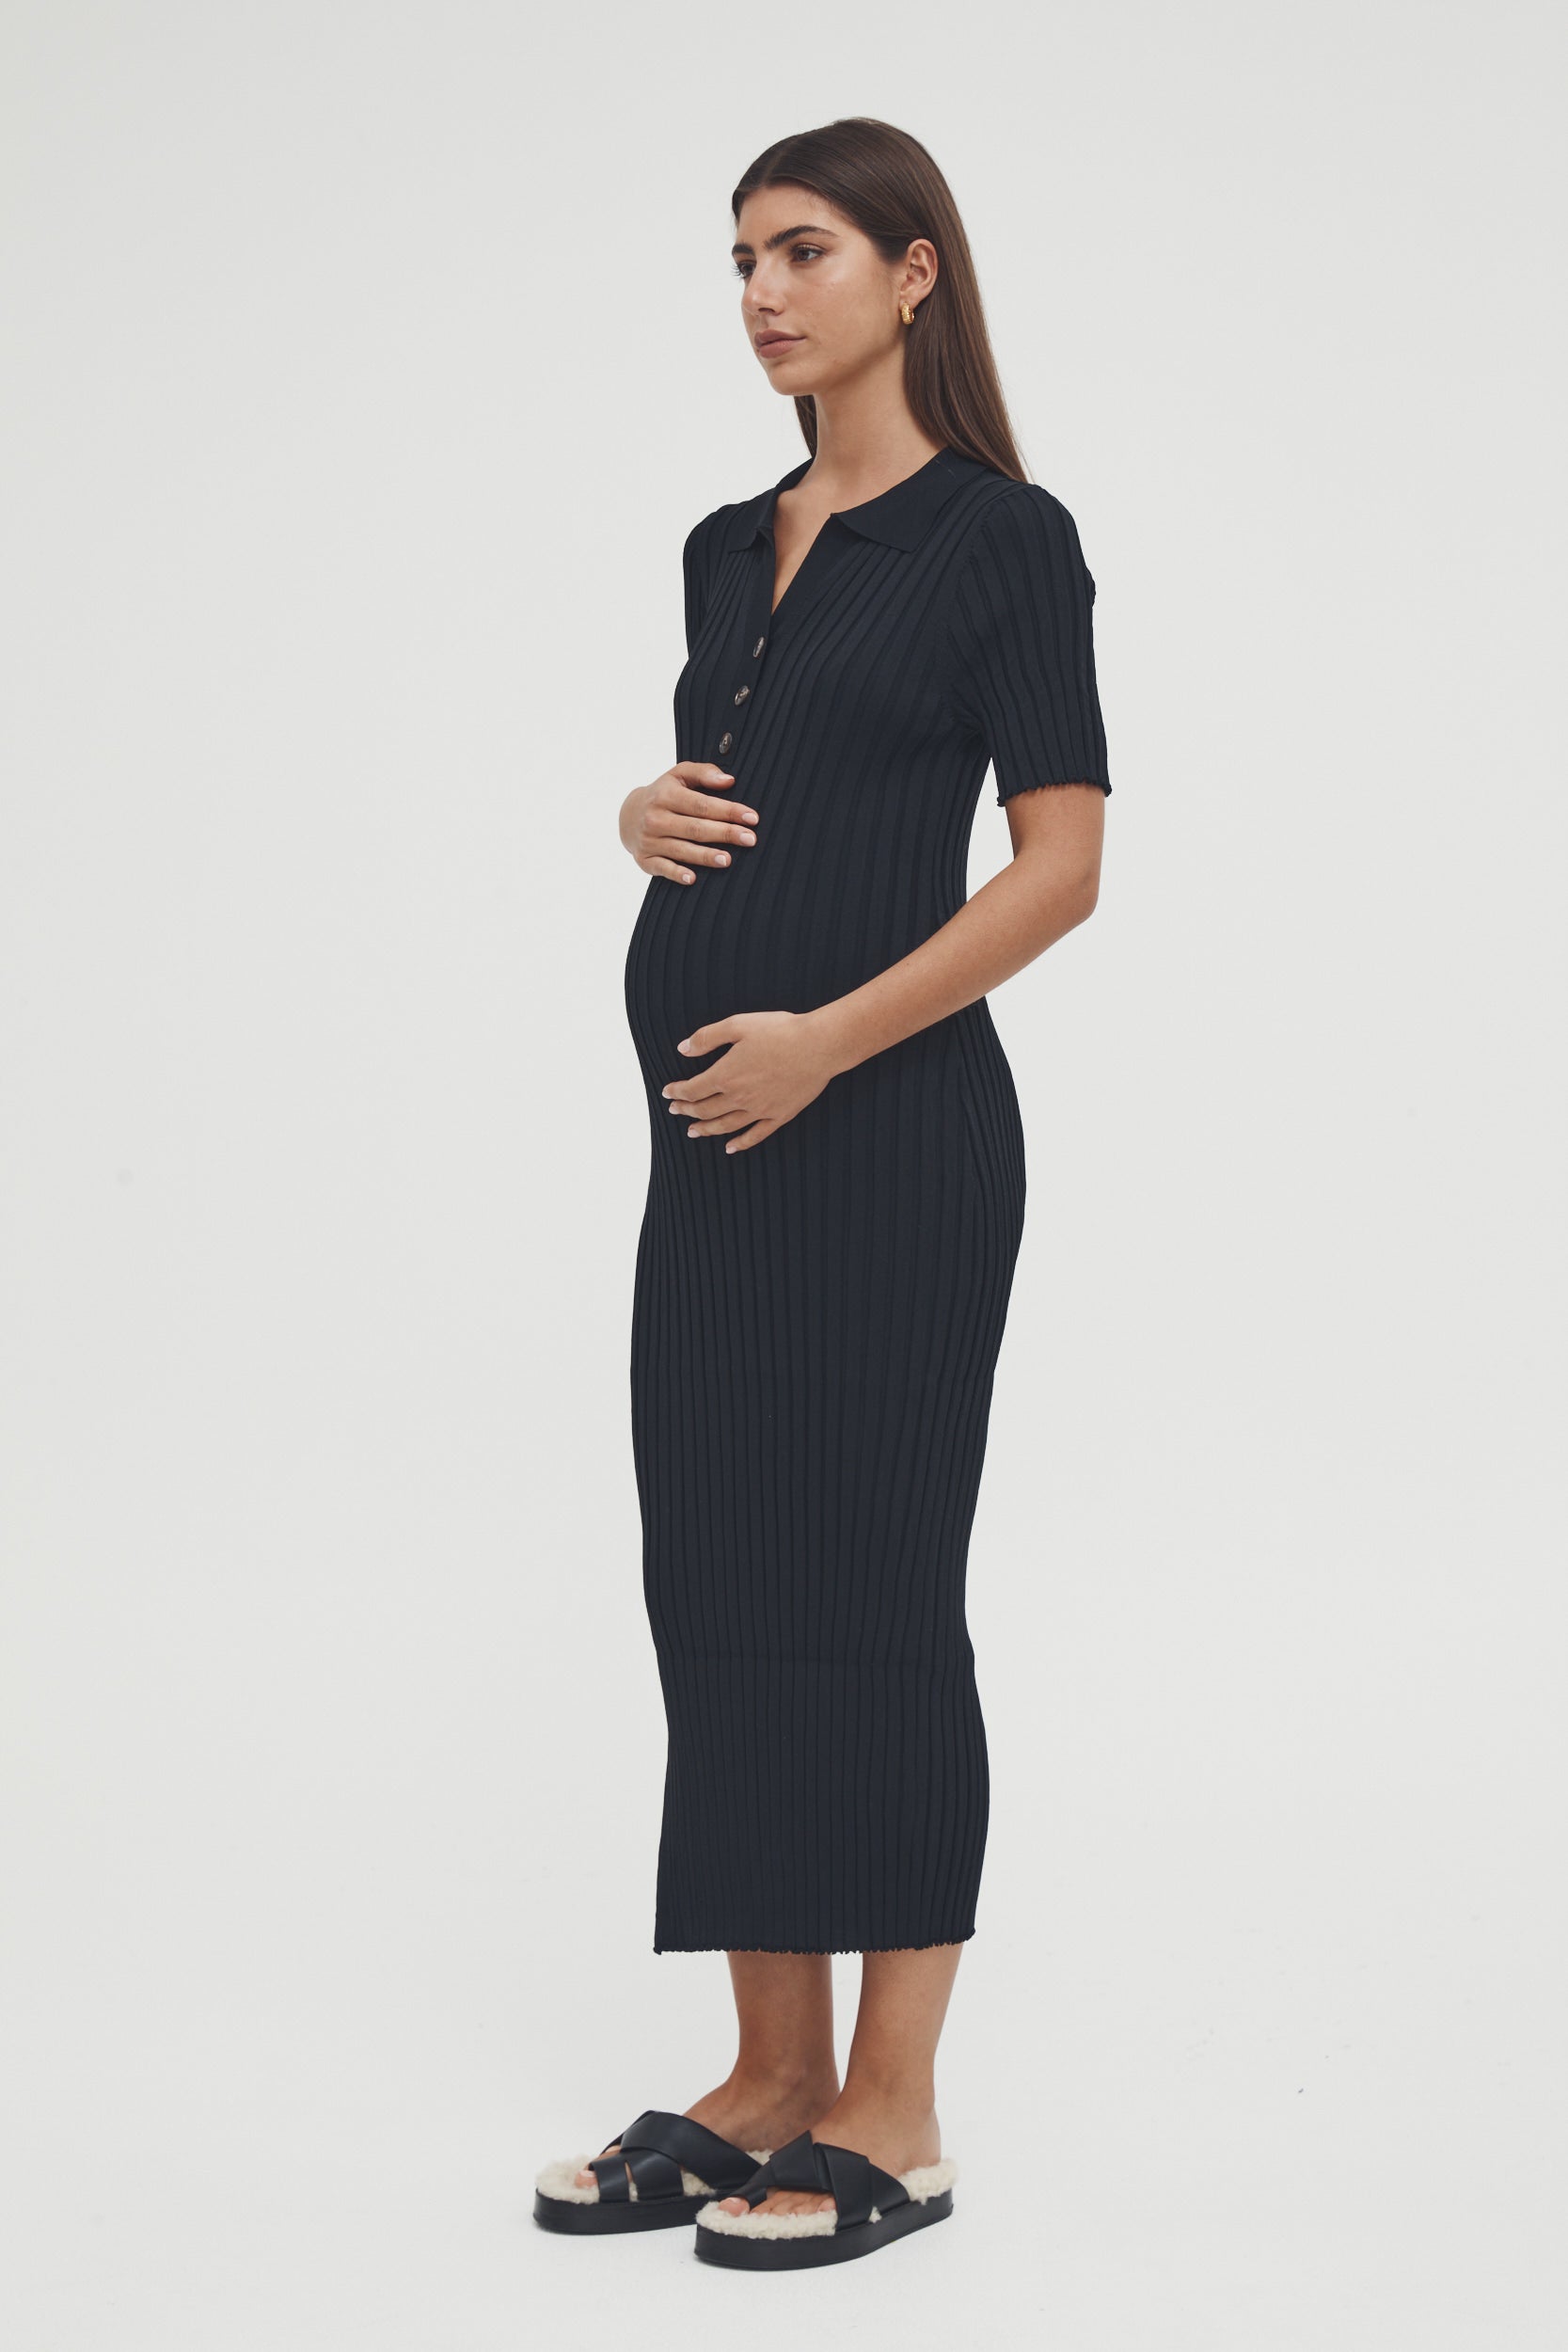 Black Tie Maternity Dress 1